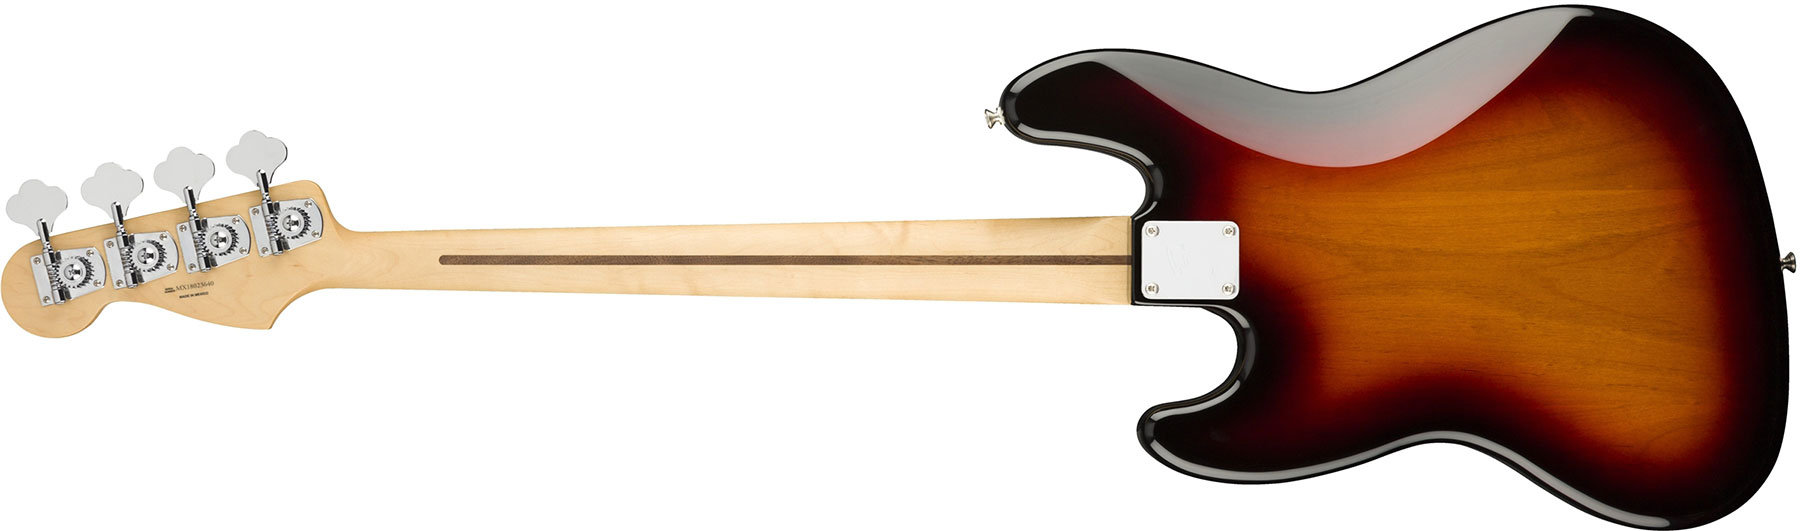 Fender Jazz Bass Player Mex Pf - 3-color Sunburst - Basse Électrique Solid Body - Variation 1